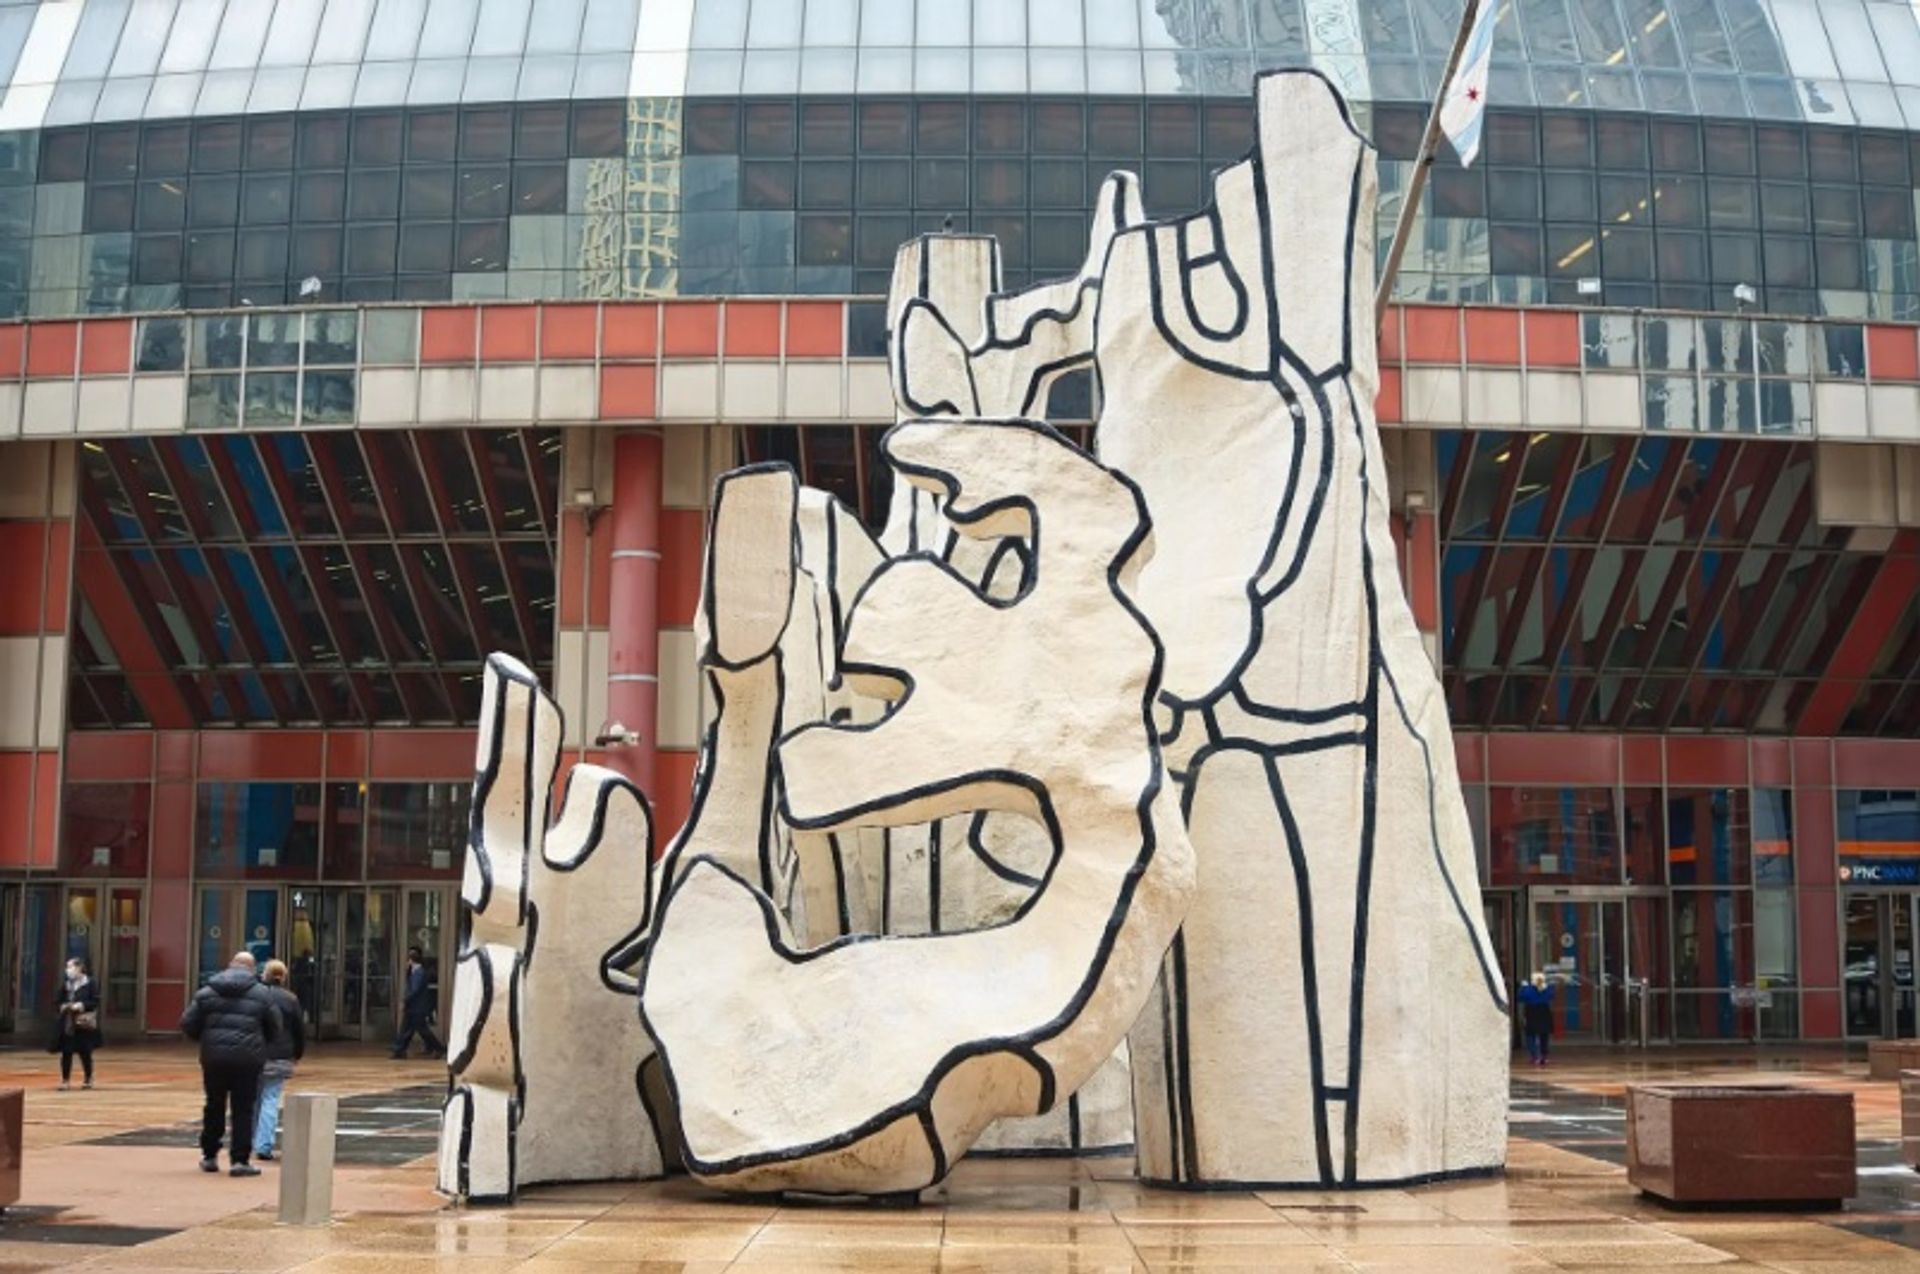 Jean Dubuffet, Monument with Standing Beast, 1984, באתר הנוכחי מחוץ למרכז ג'יימס ר. תומפסון בשיקגו

תמונה מאת כריס ריקרופט, דרך פליקר